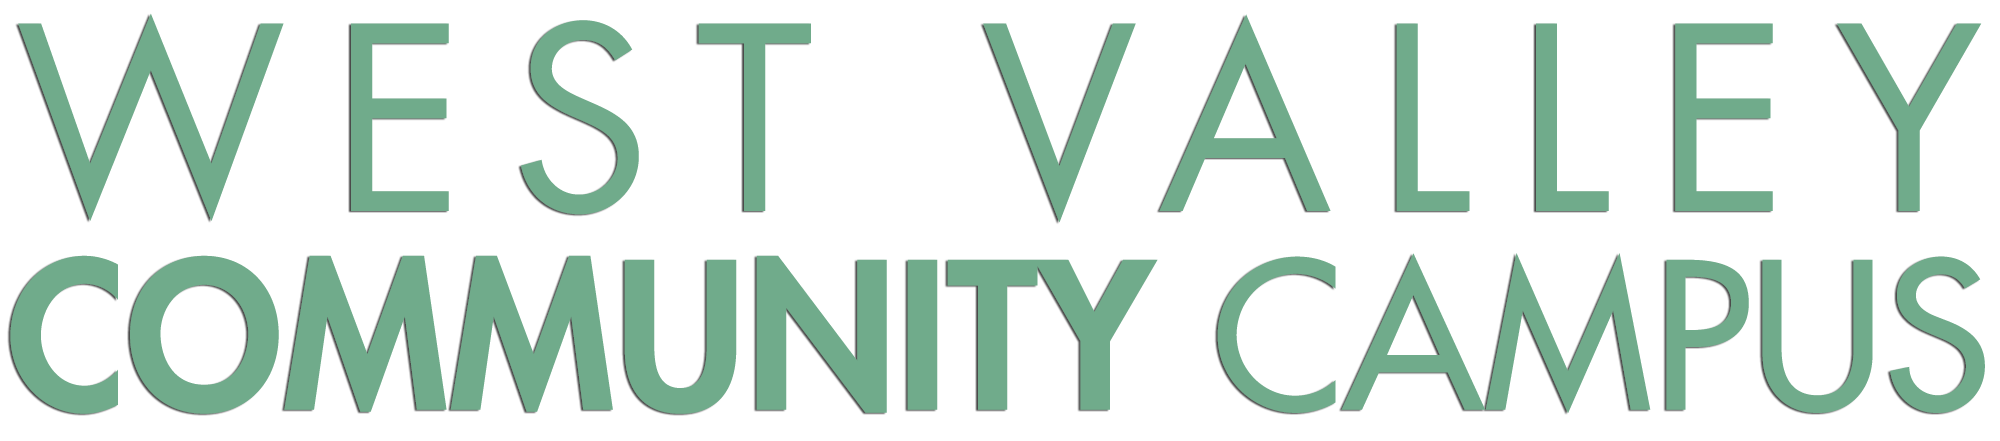 West Valley Community Campus logo